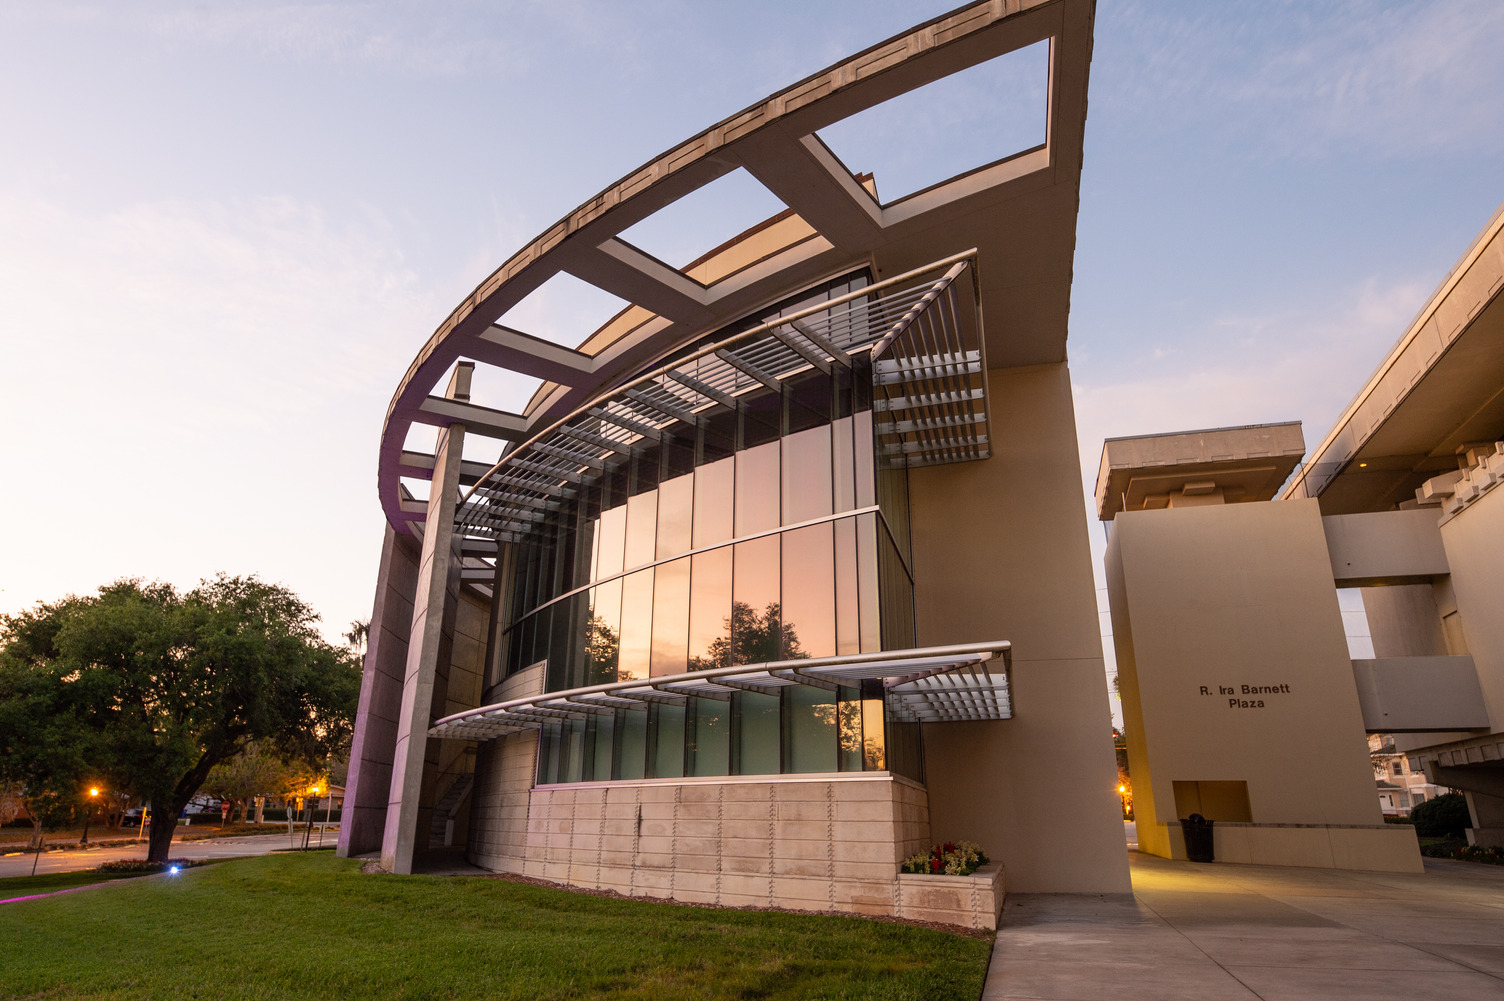 McKay Archives Center